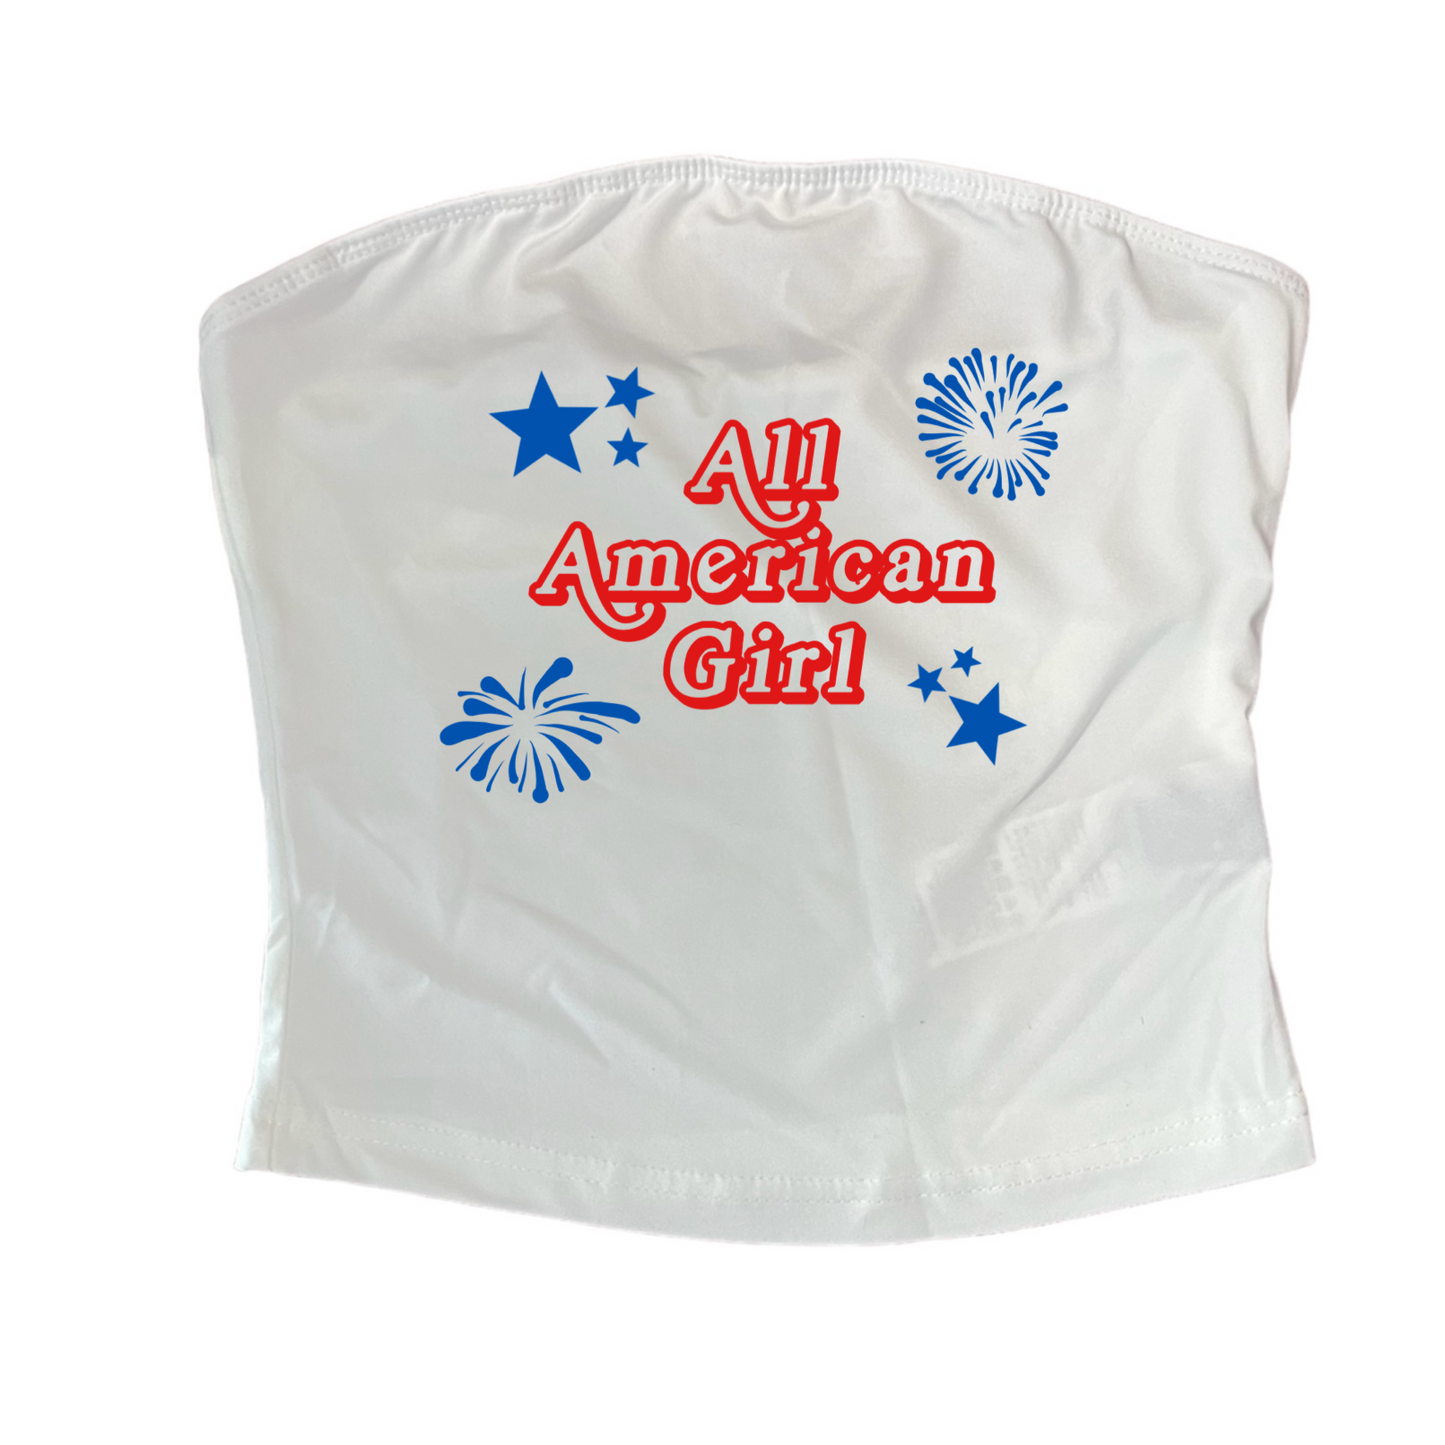 All American Girl White Tube Top